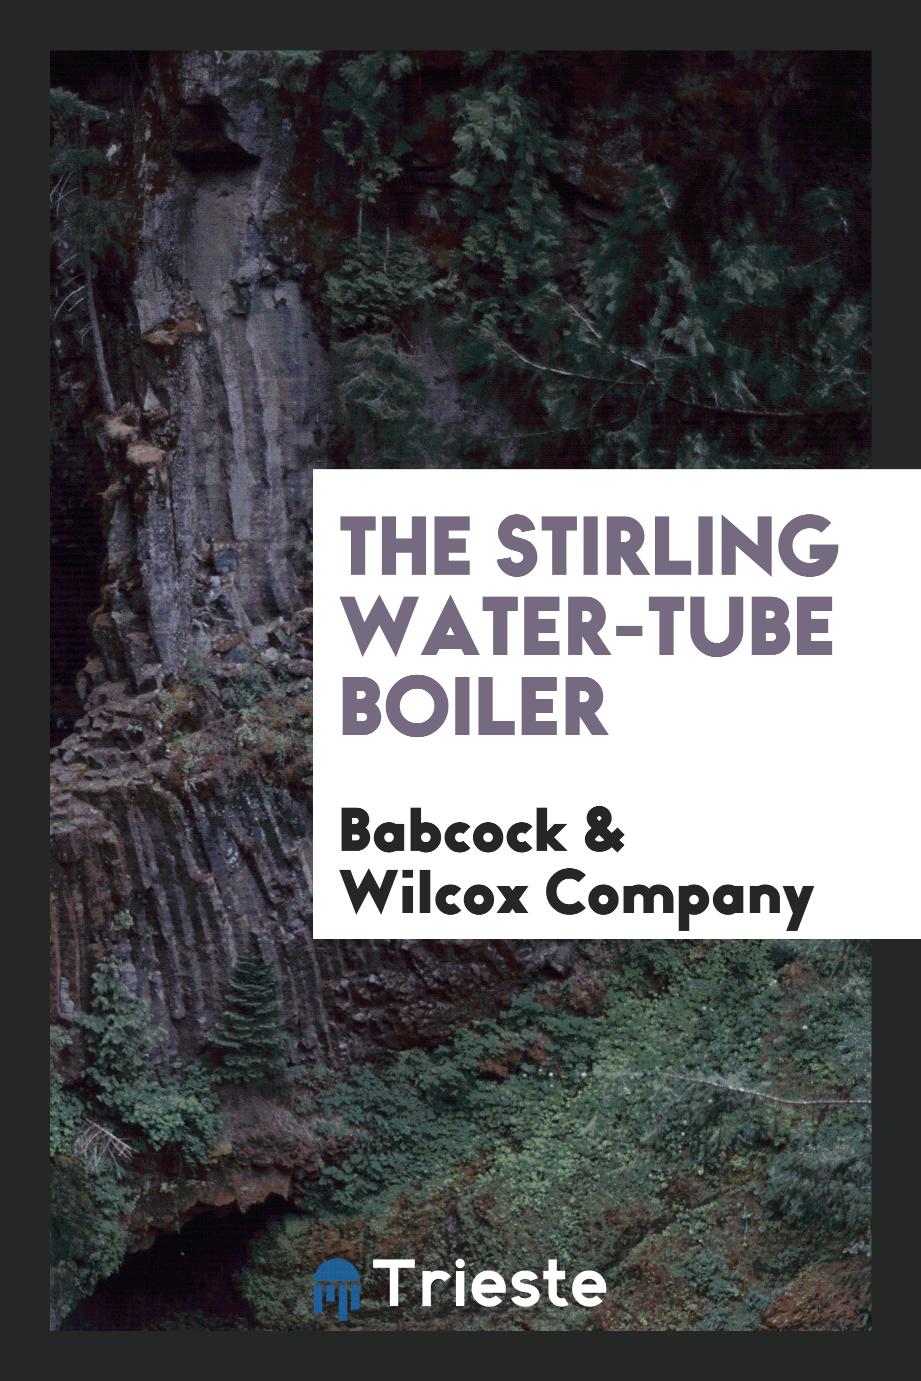 The Stirling Water-tube Boiler